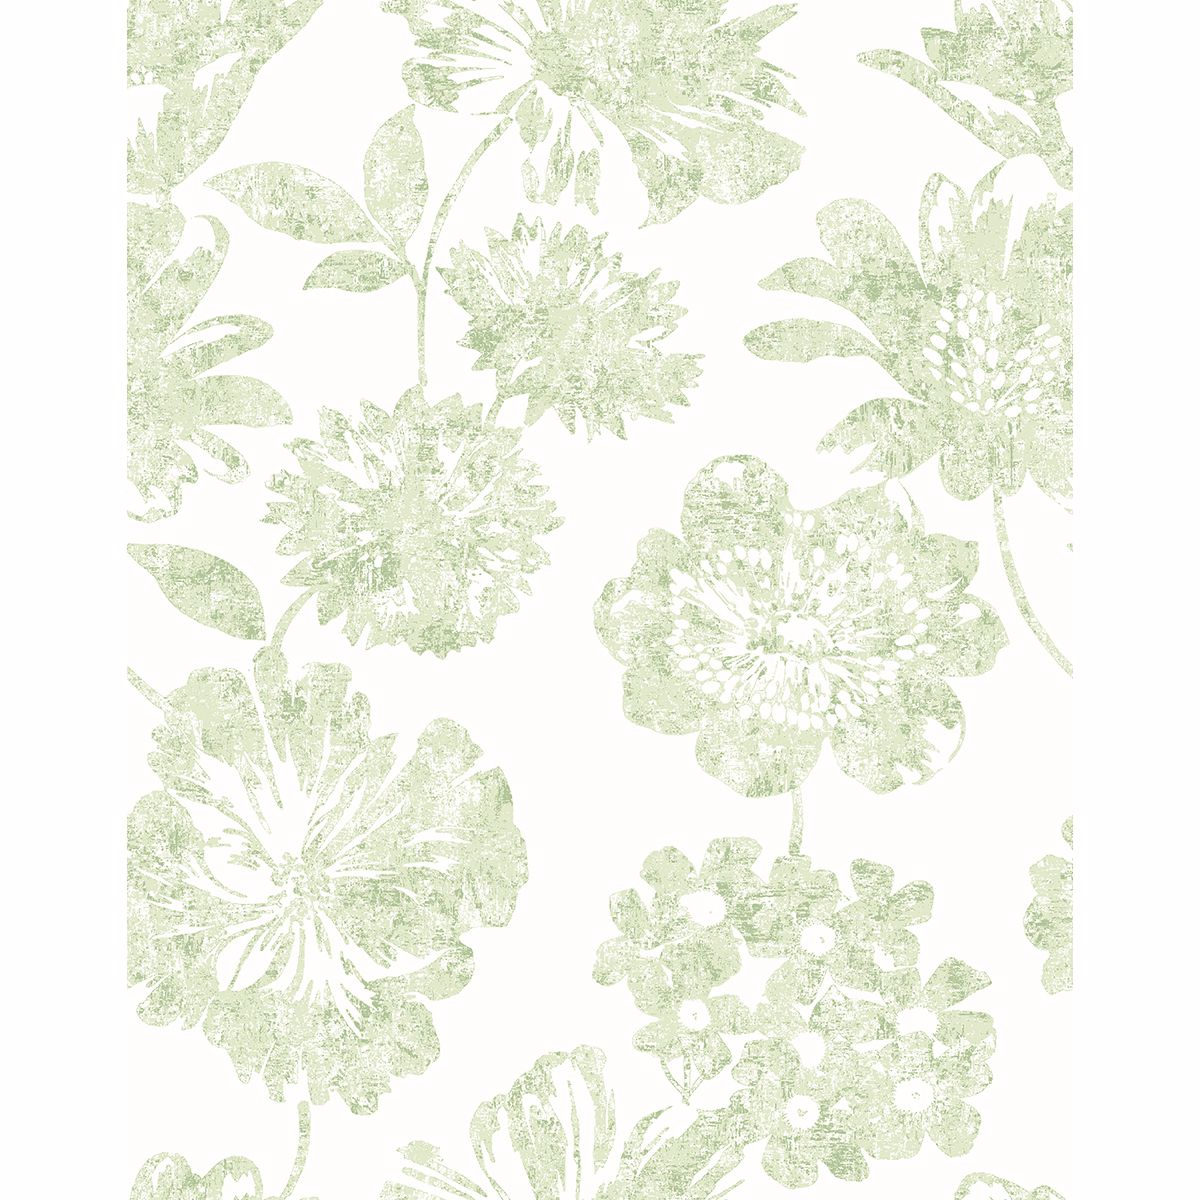 2901-25419 - Folia Light Green Floral Wallpaper - by A-Street Prints